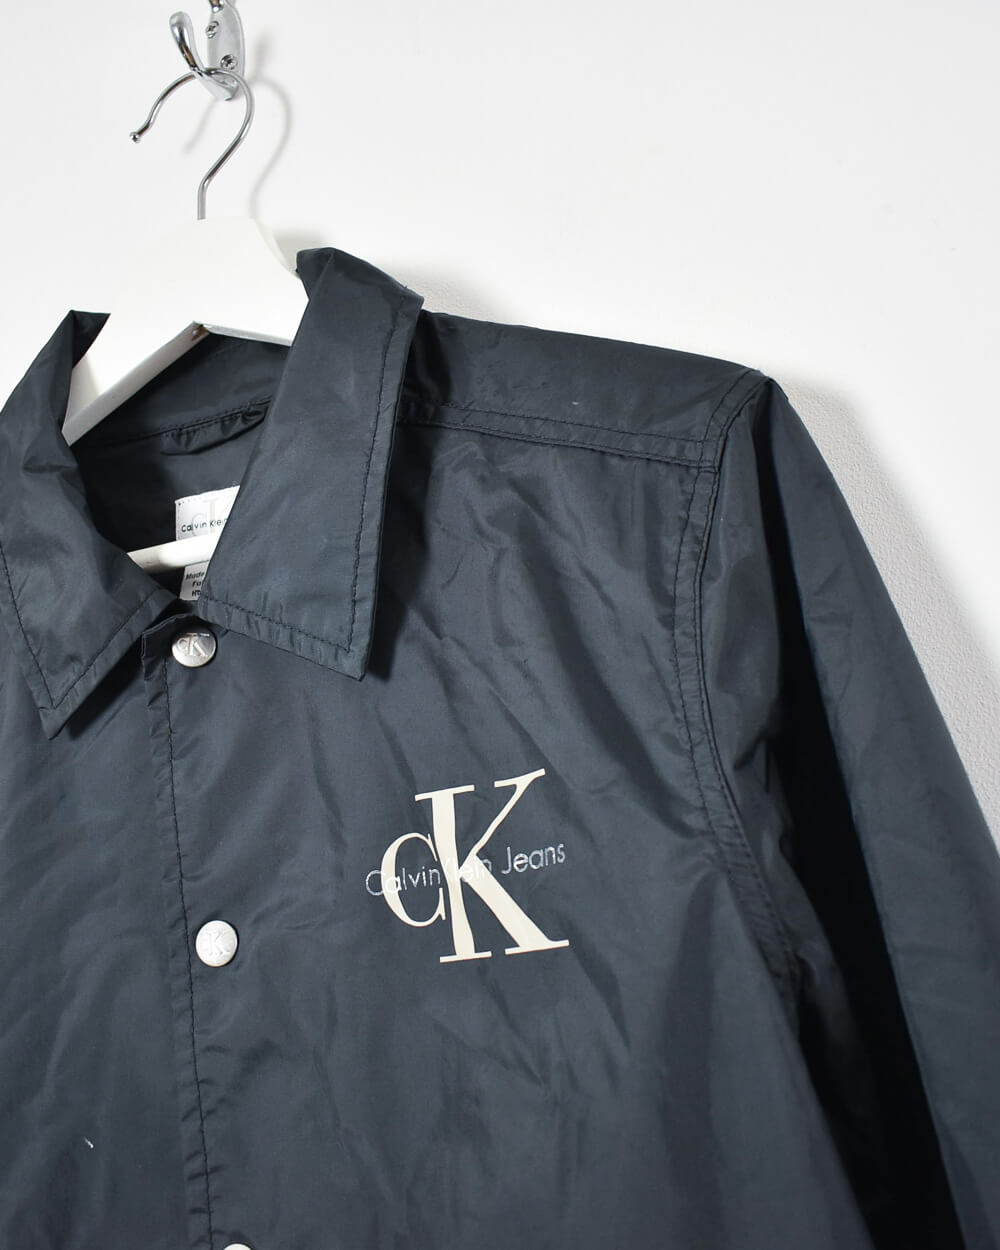 Calvin Klein Jeans Women's Coach Jacket - Medium - Domno Vintage 90s, 80s, 00s Retro and Vintage Clothing 